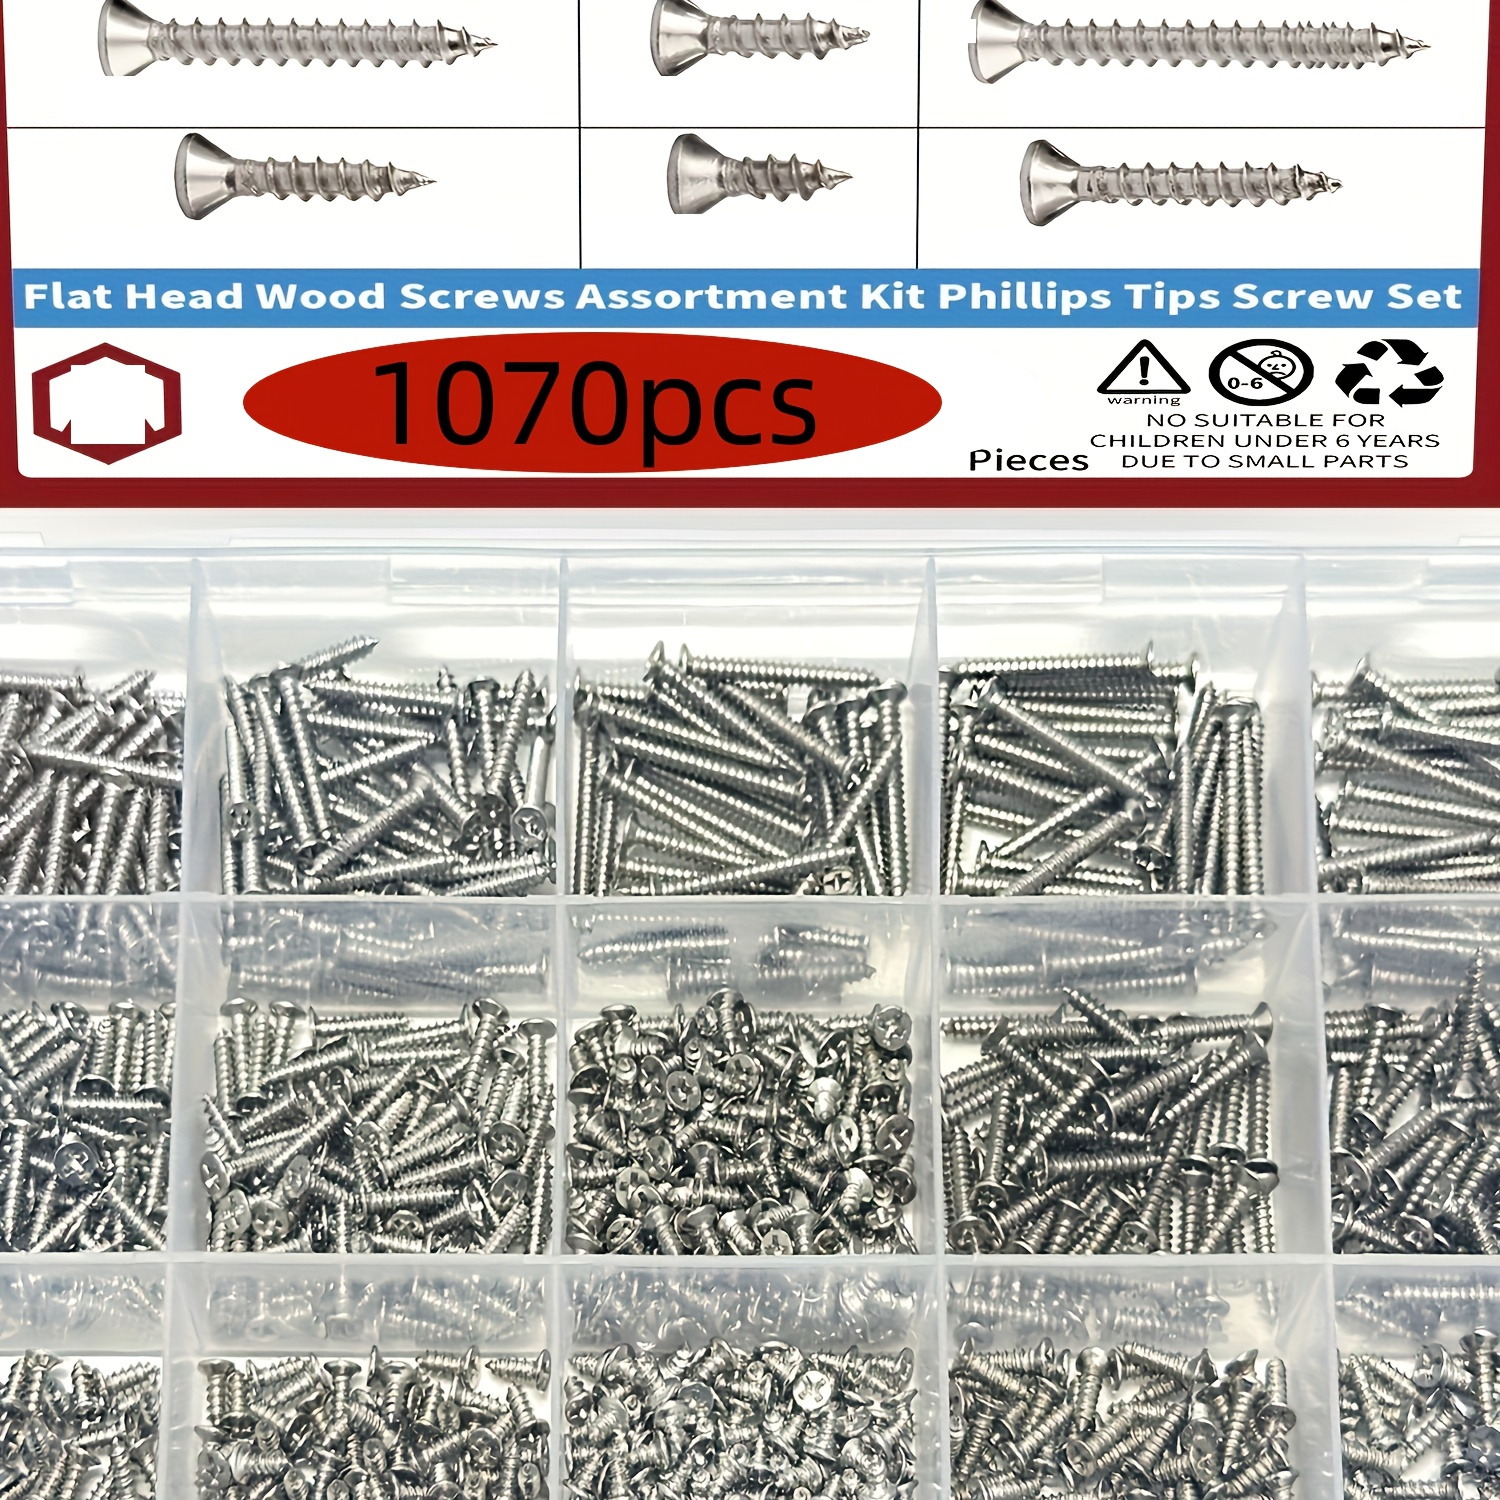 

1070pcs Wood Screws Assortment Kit, Phillips Tips Wood Screws Set, Screws, Flat Head Assorted Screws M2 M3 M4 Carbon Steel Nickel Plated